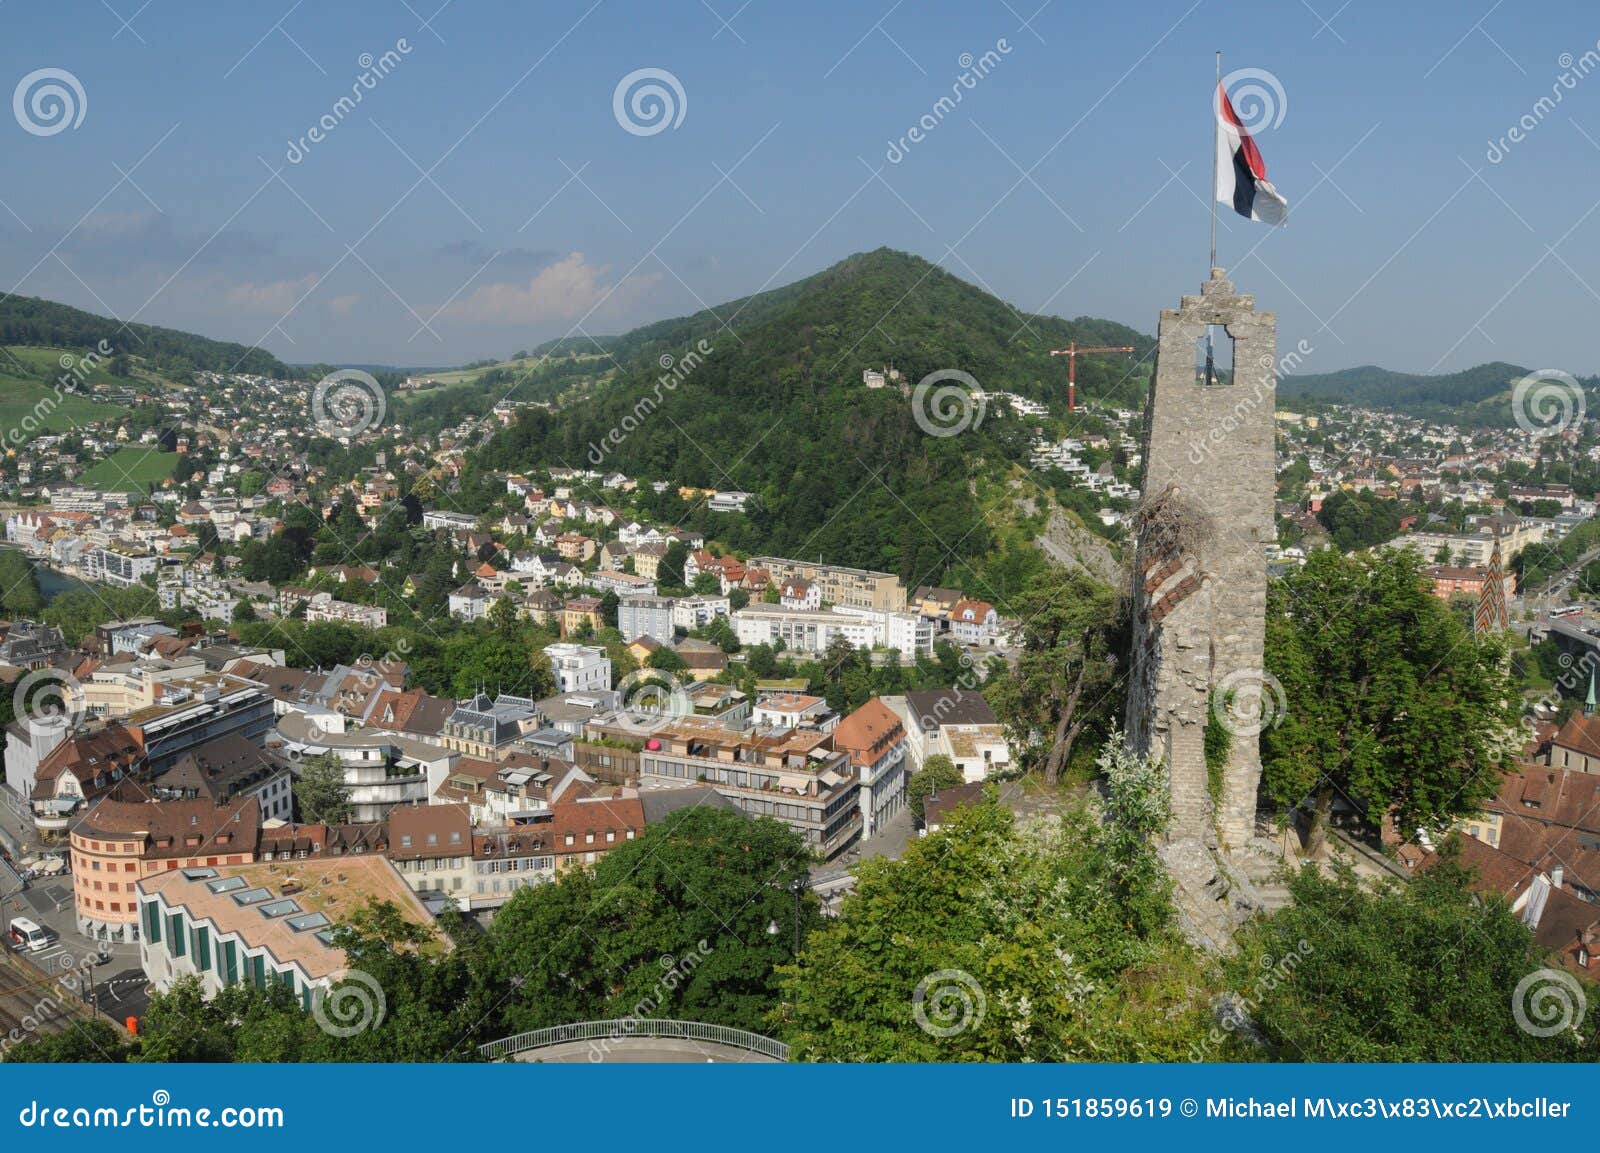 Switzerland: Baden City in Canton Aargau Stock Image - Image of ...